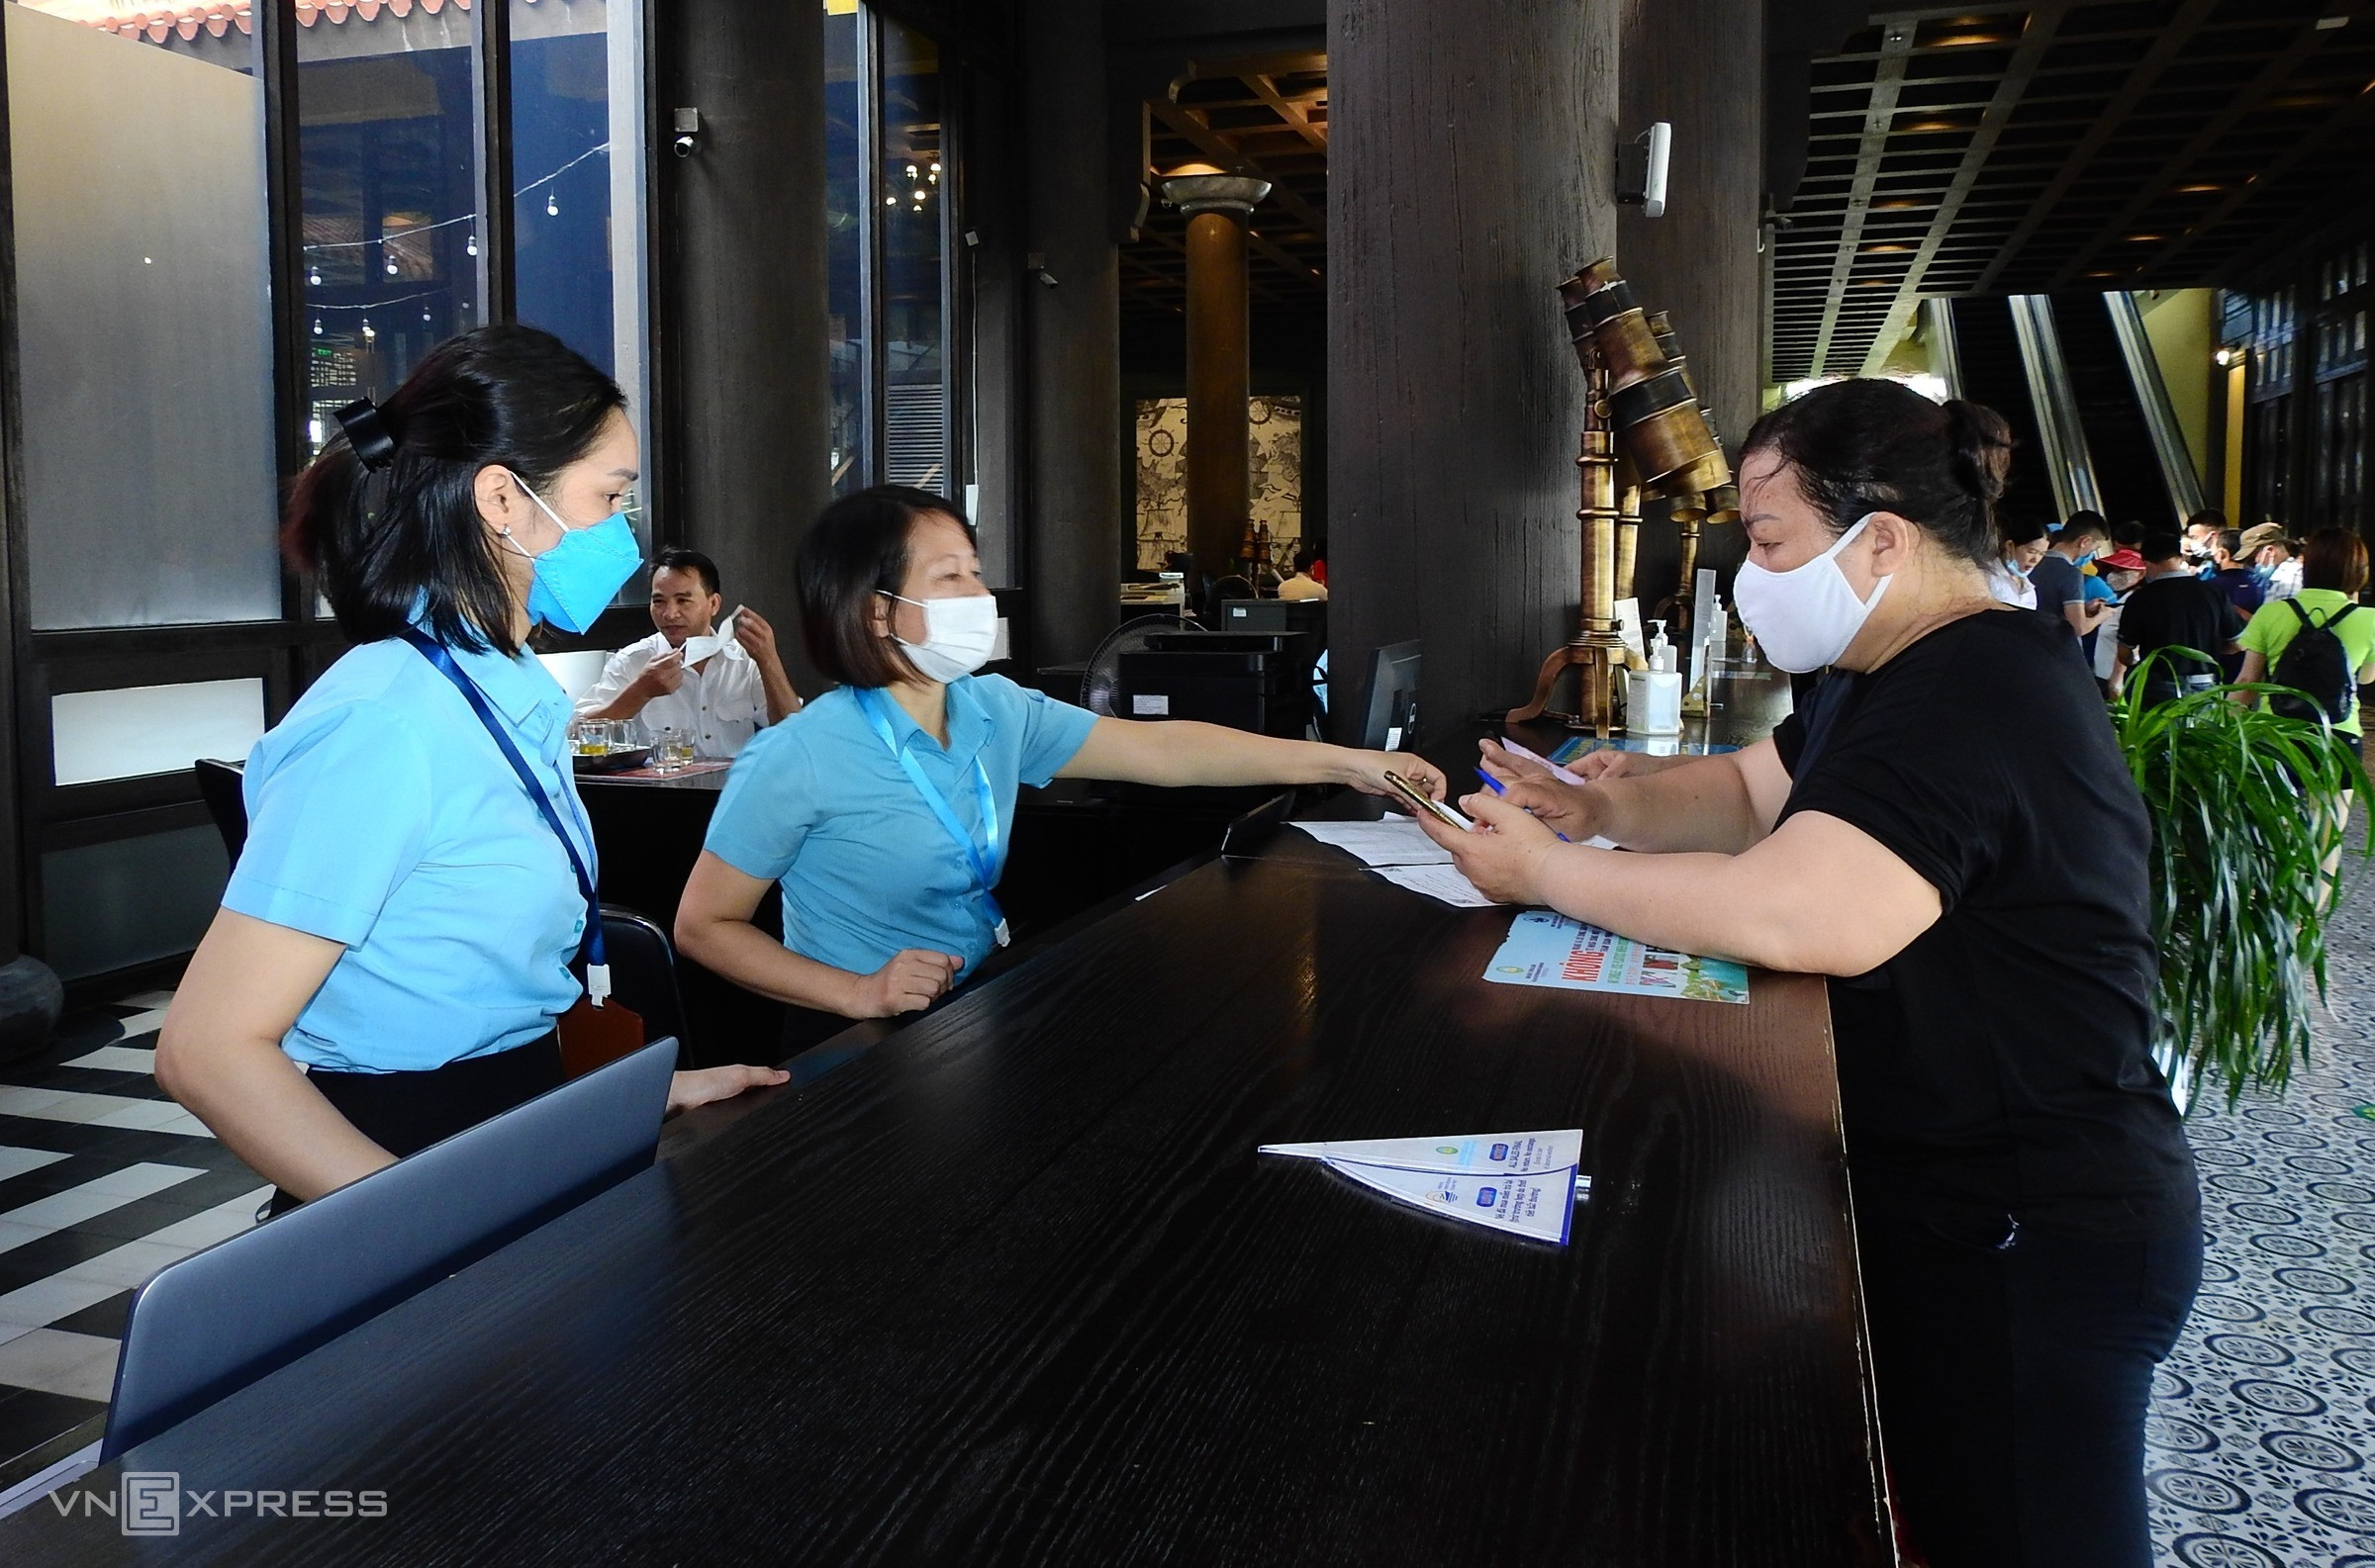 Ha Long Bay bustles after months of frozen tourism